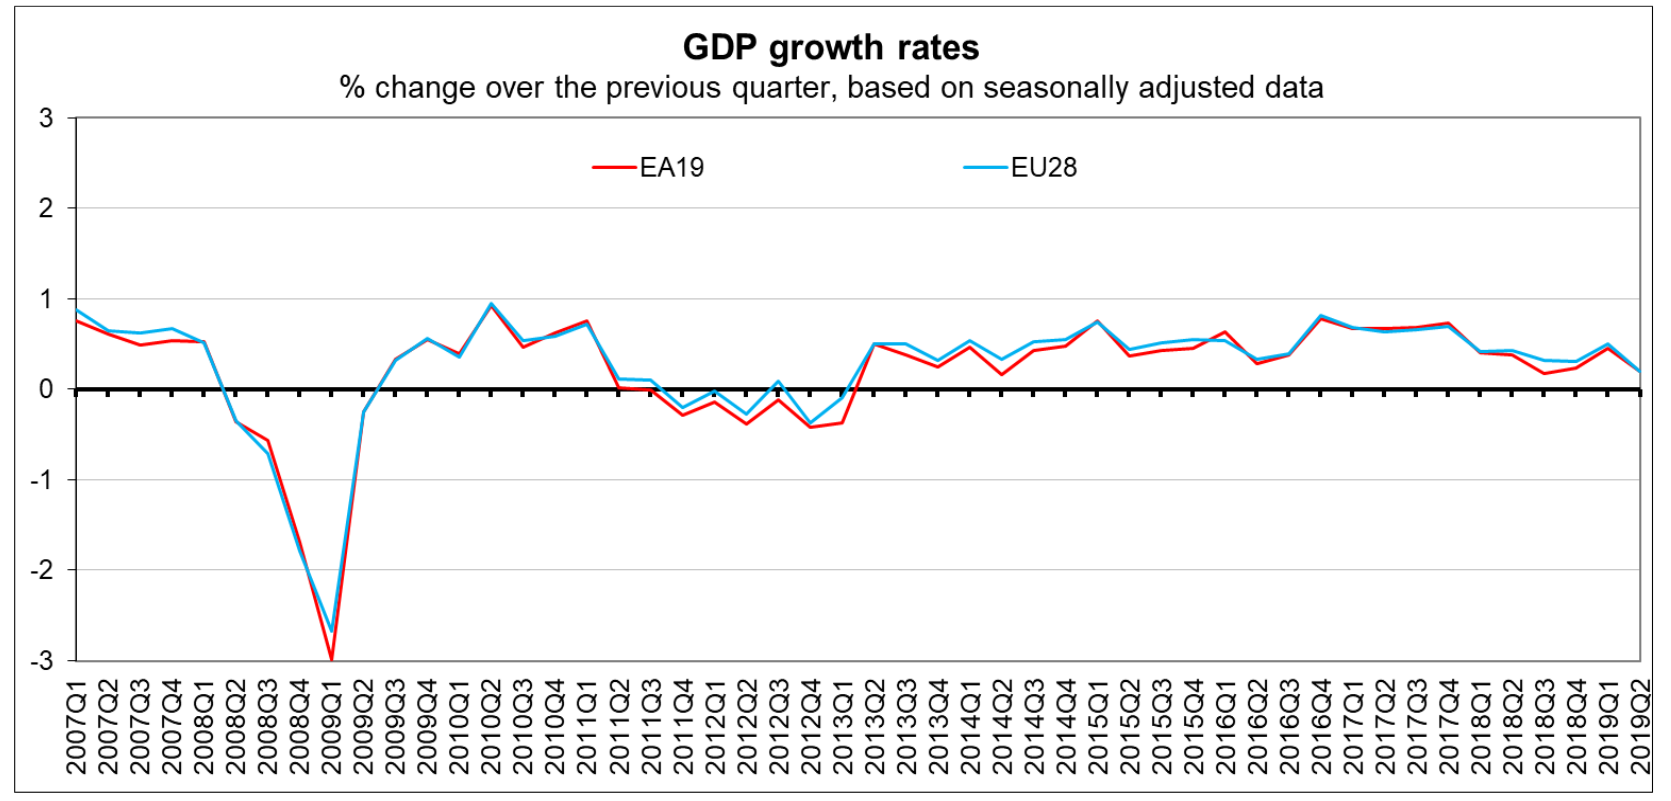 Eurozone European Union GDP Growth until Q2 2019